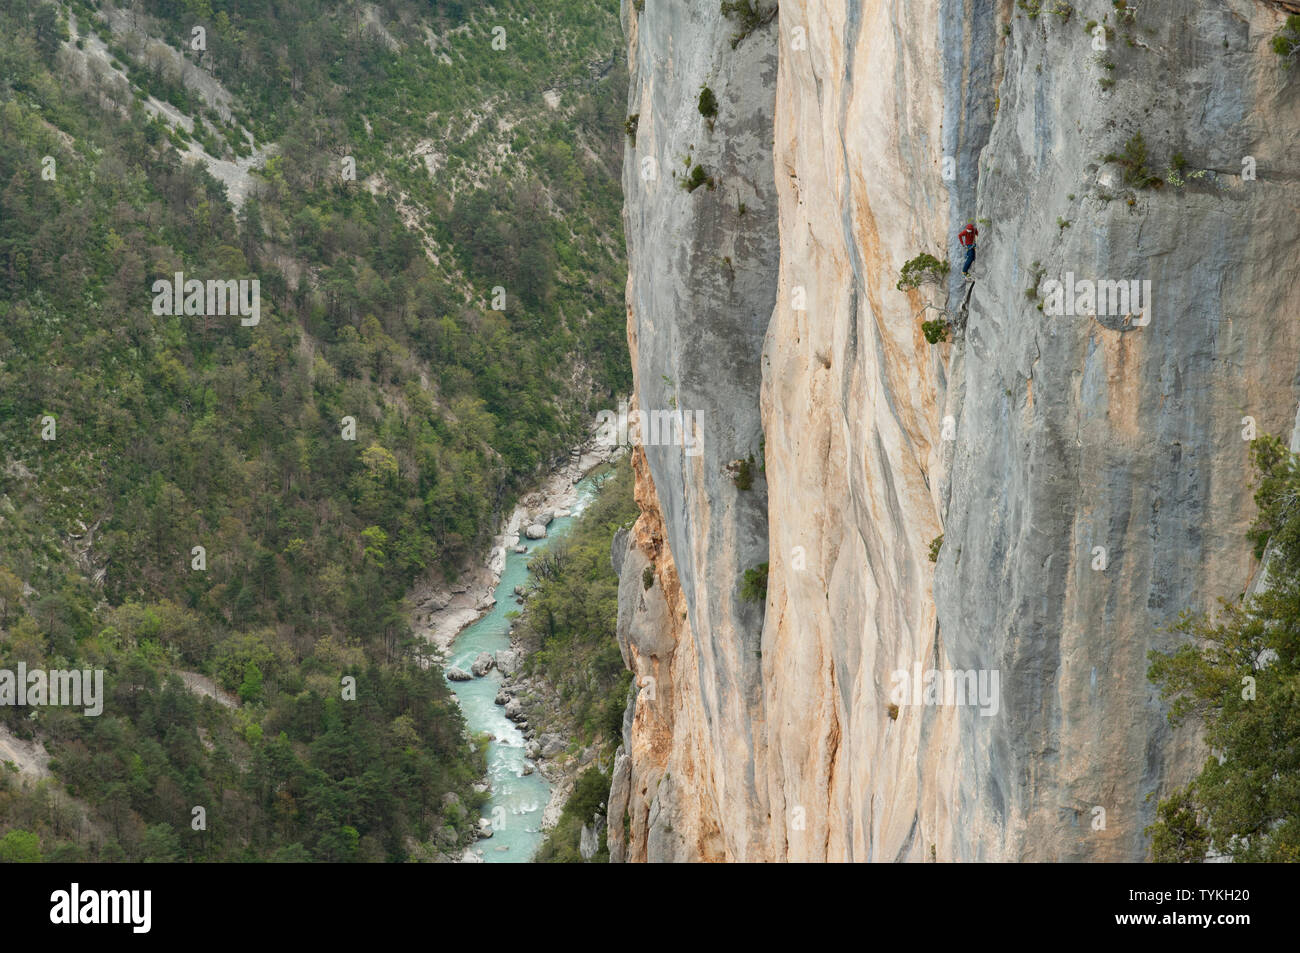 Climber on a rockface at the Gorges du Verdon - Provence, France. Stock Photo